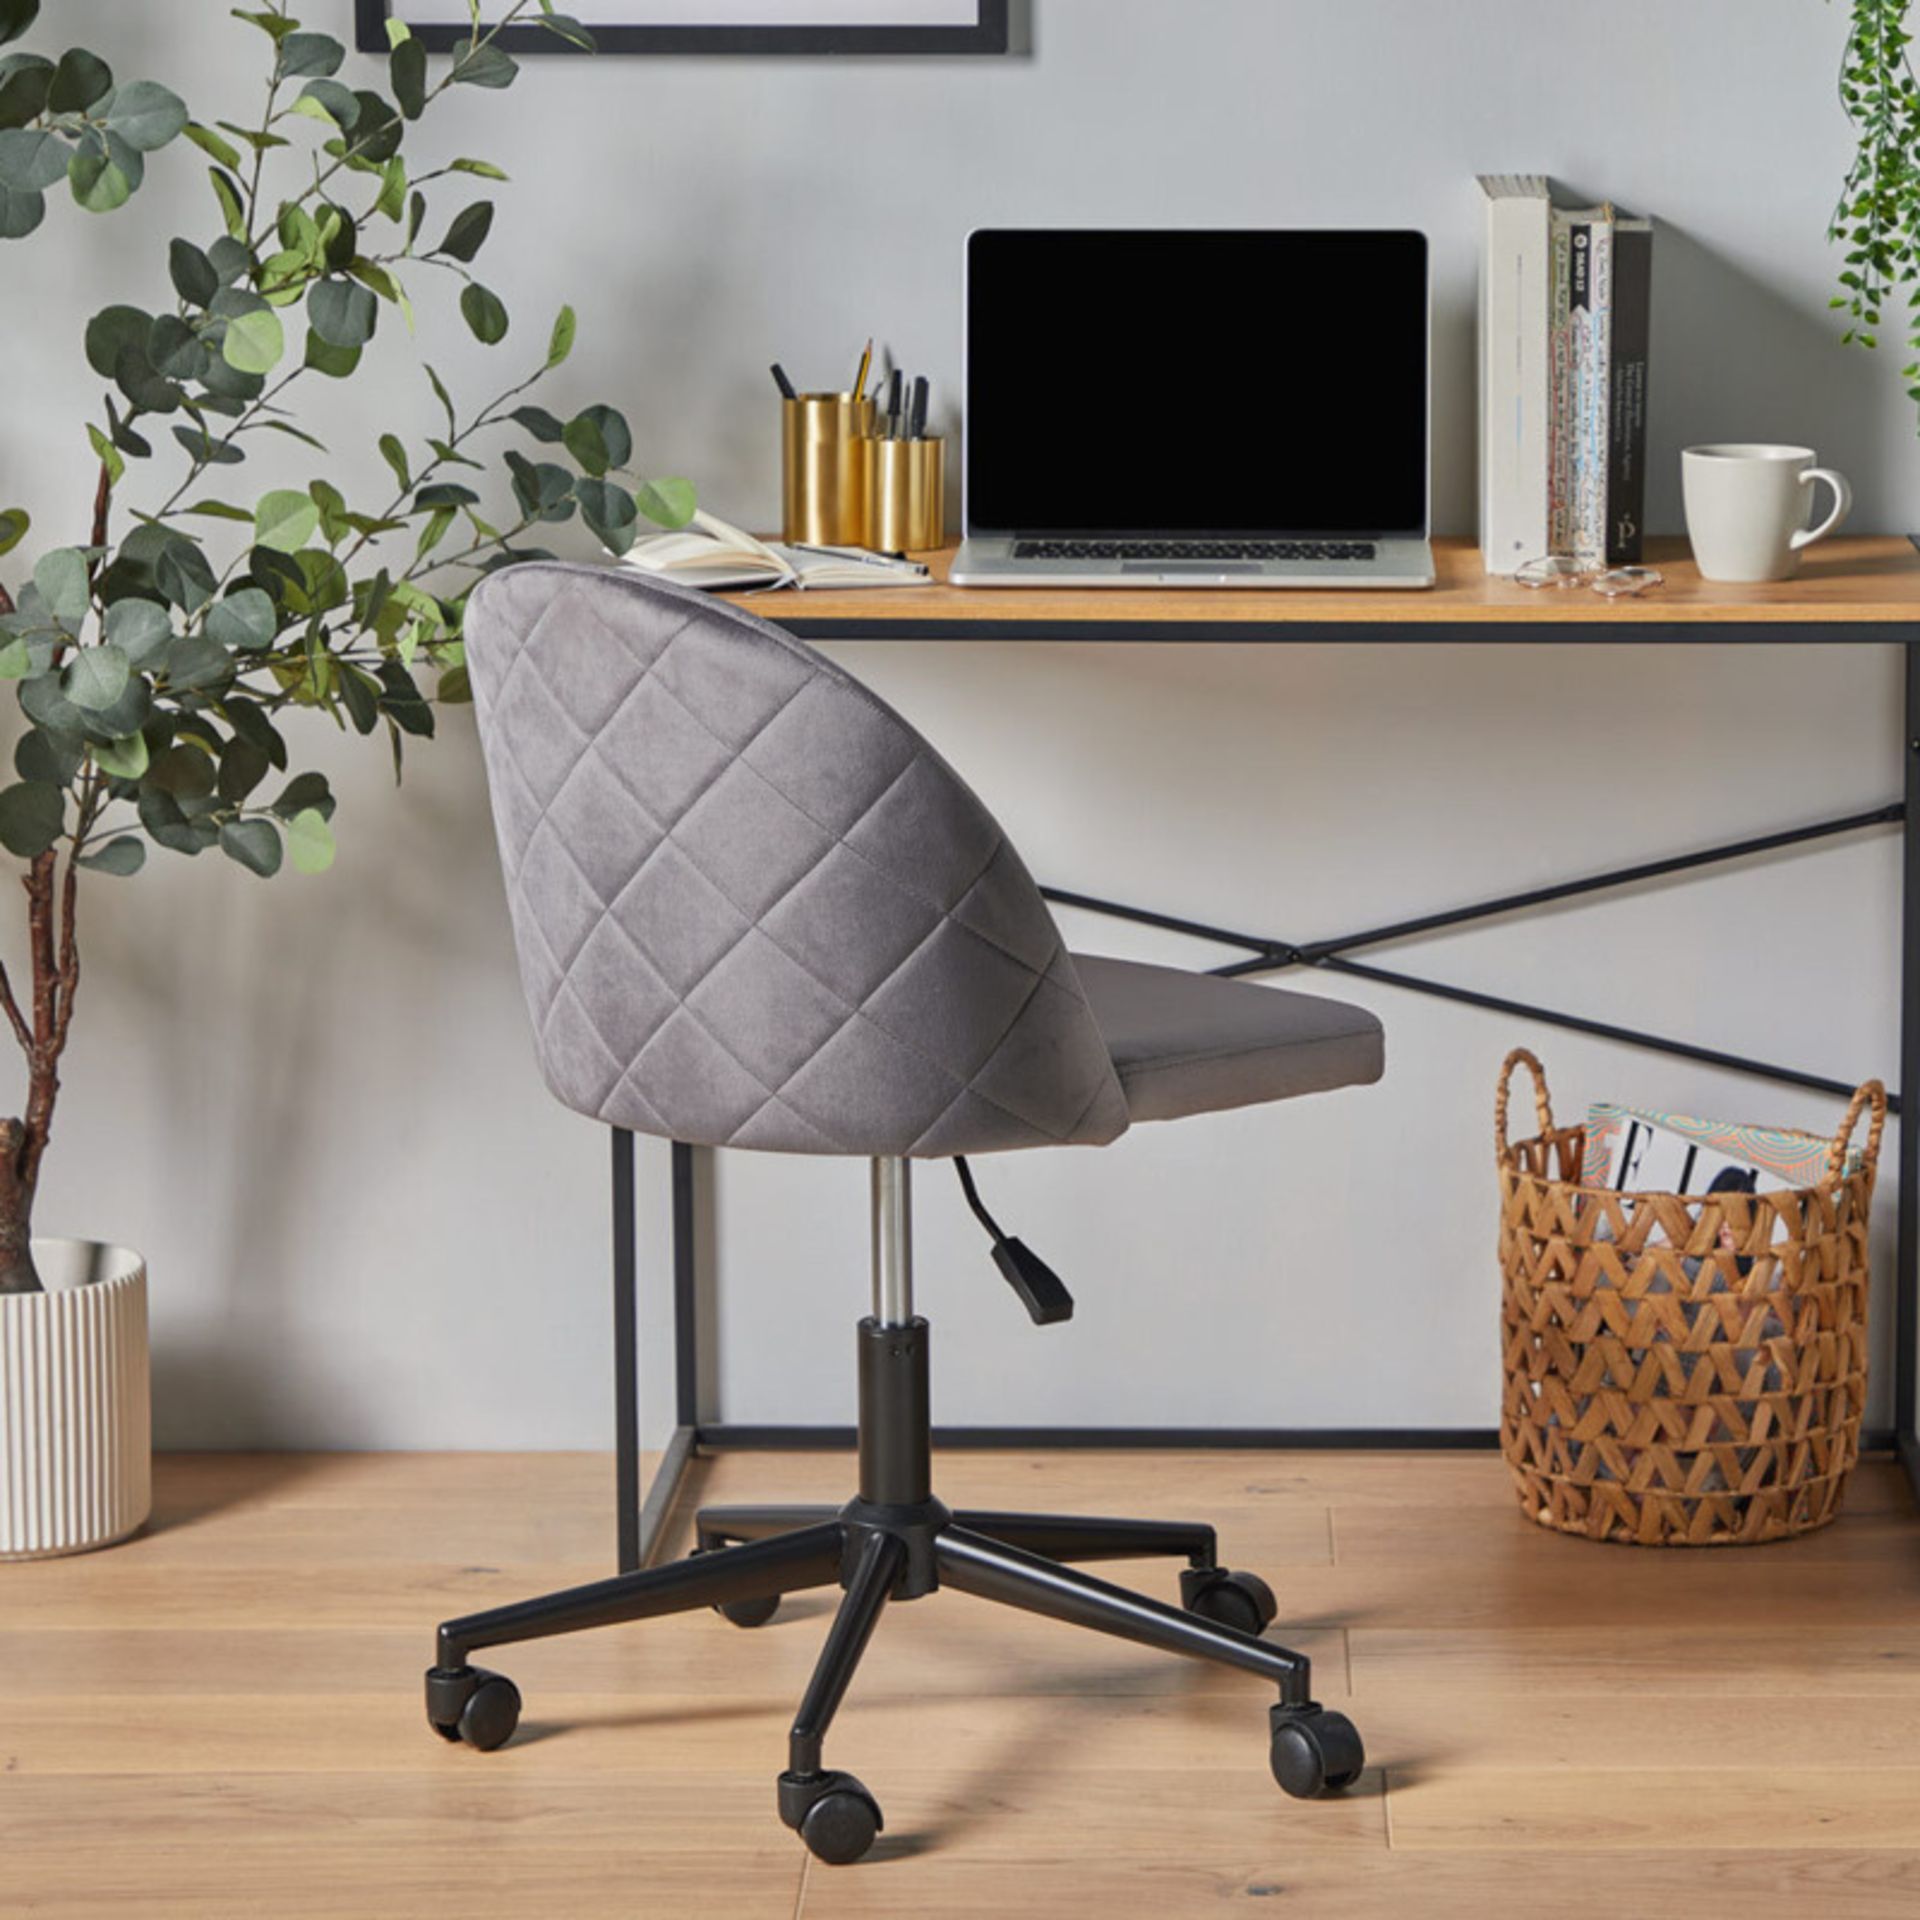 2 X Brand New Grey Velvet Office Chair (3000315), Velvet Office ChairMake working from home a